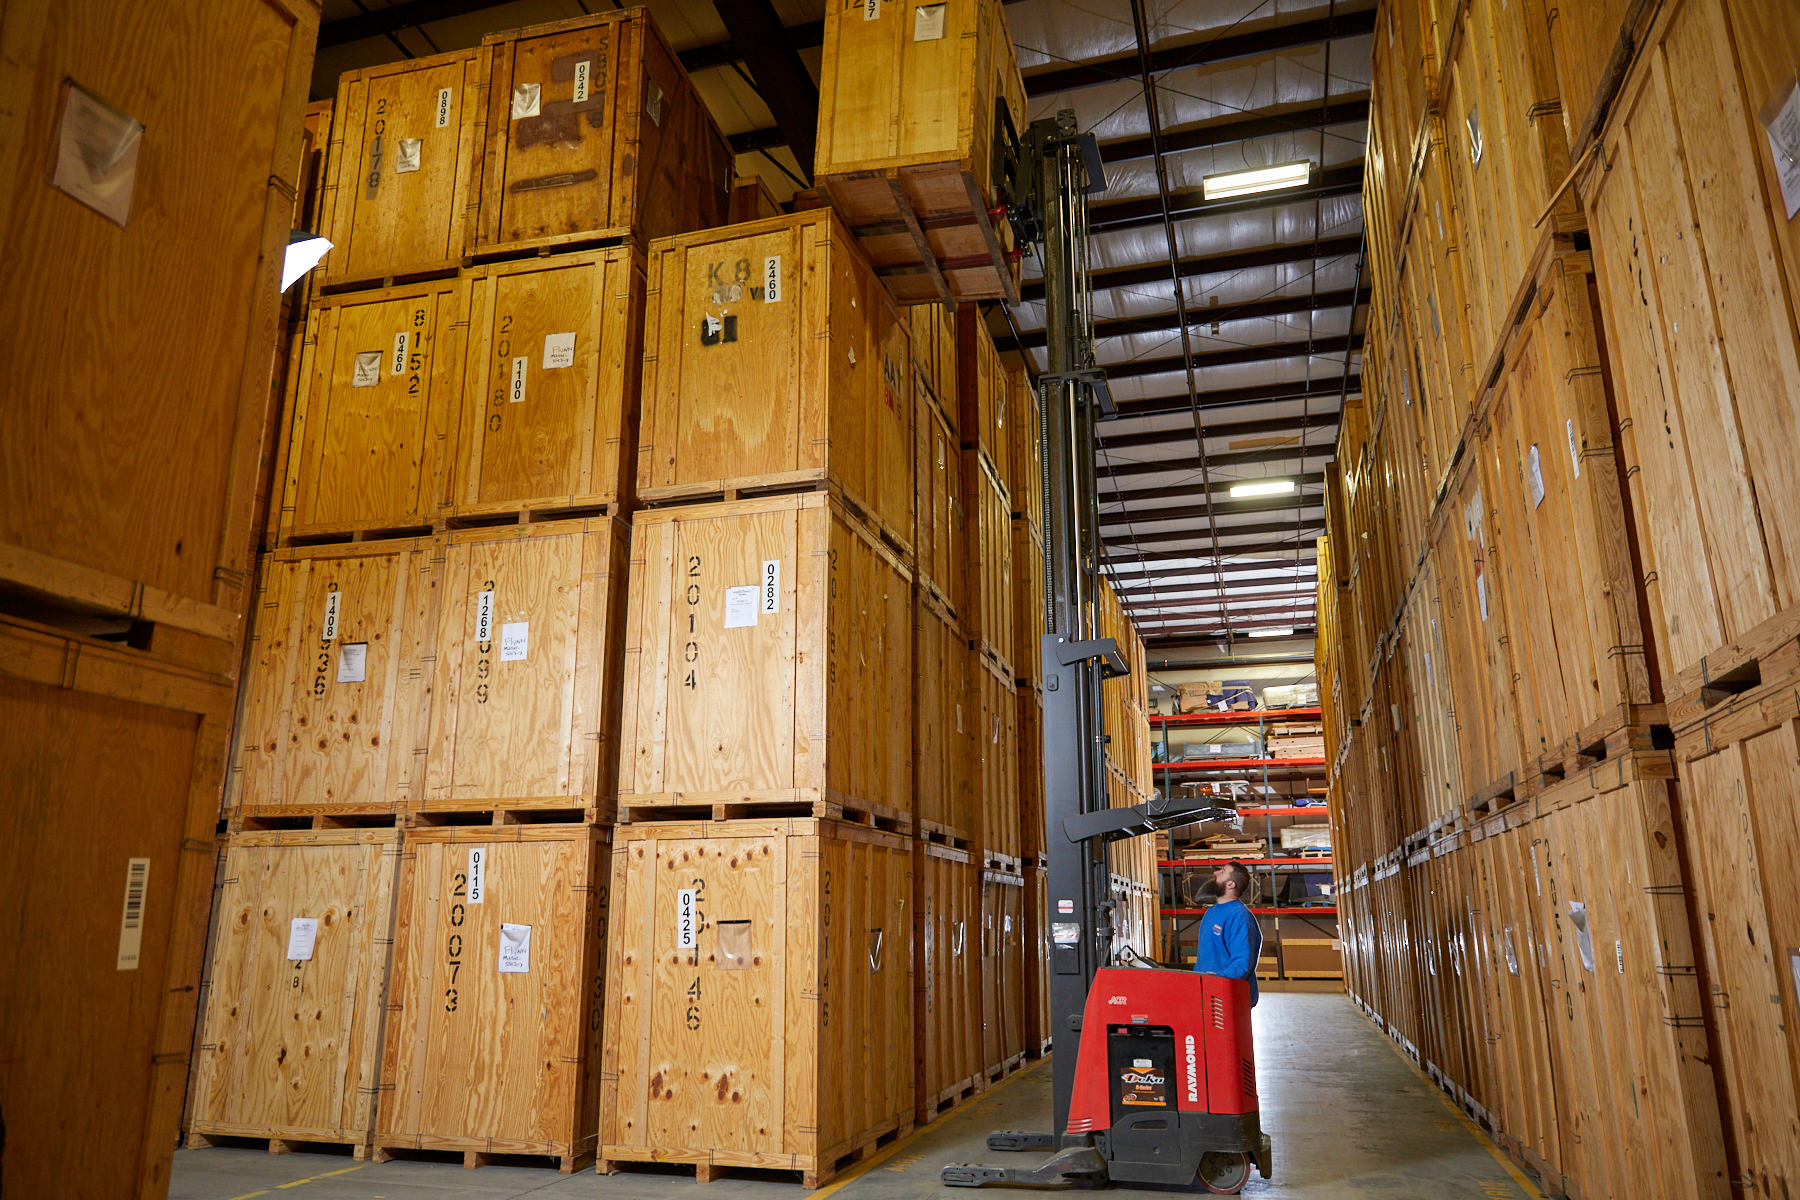 Humboldt's storage facility